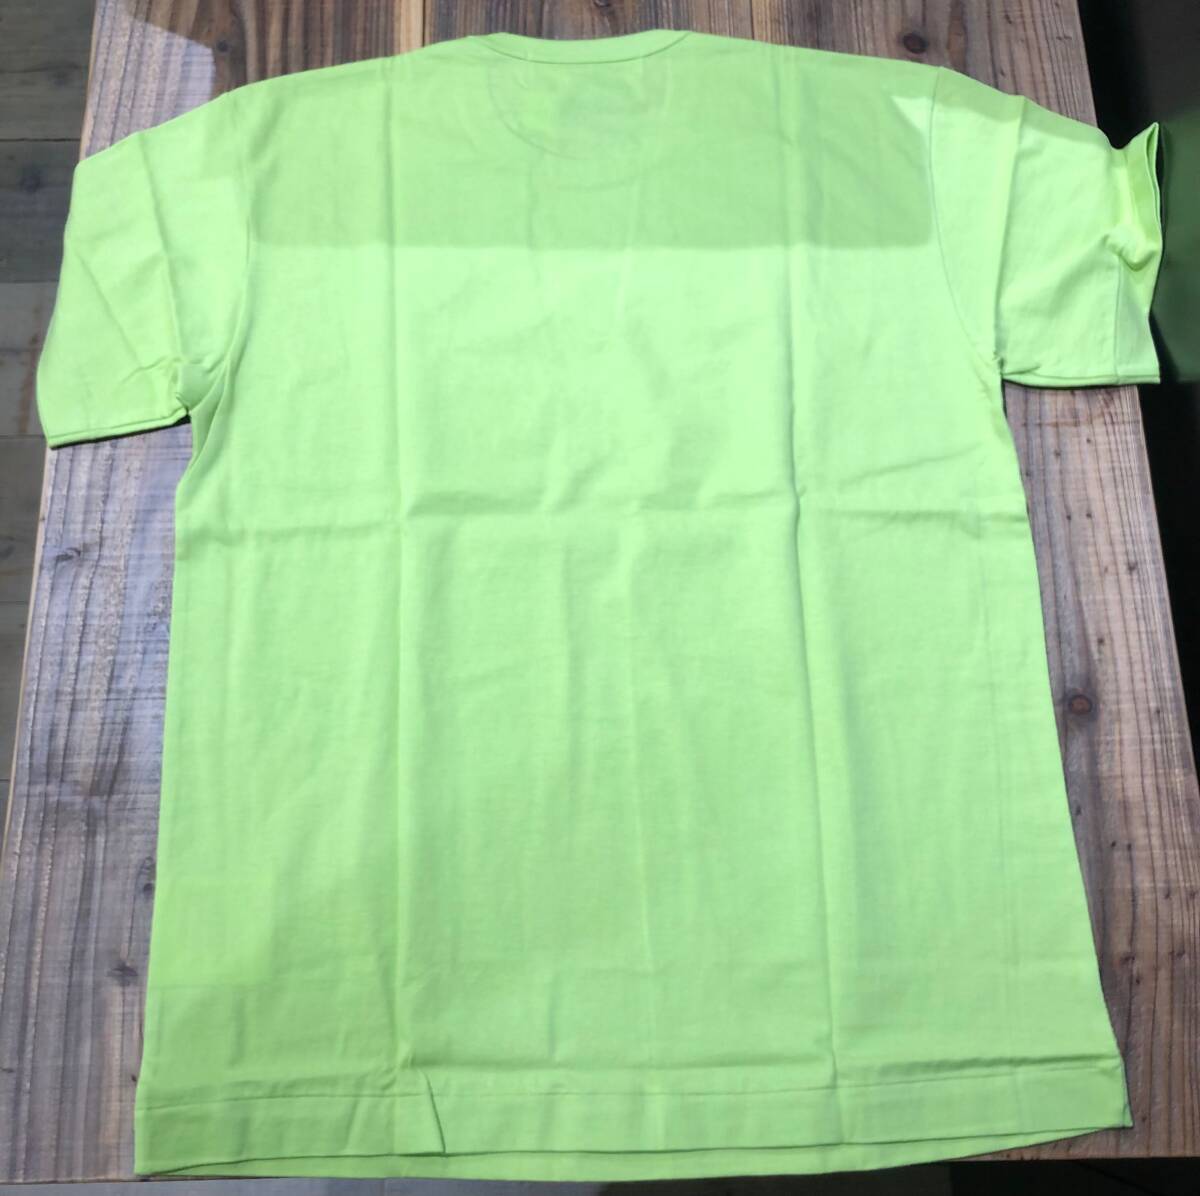 COMME des GARCONS PLAY　黄緑Tシャツ　メンズXLサイズ　AZ-T272-2